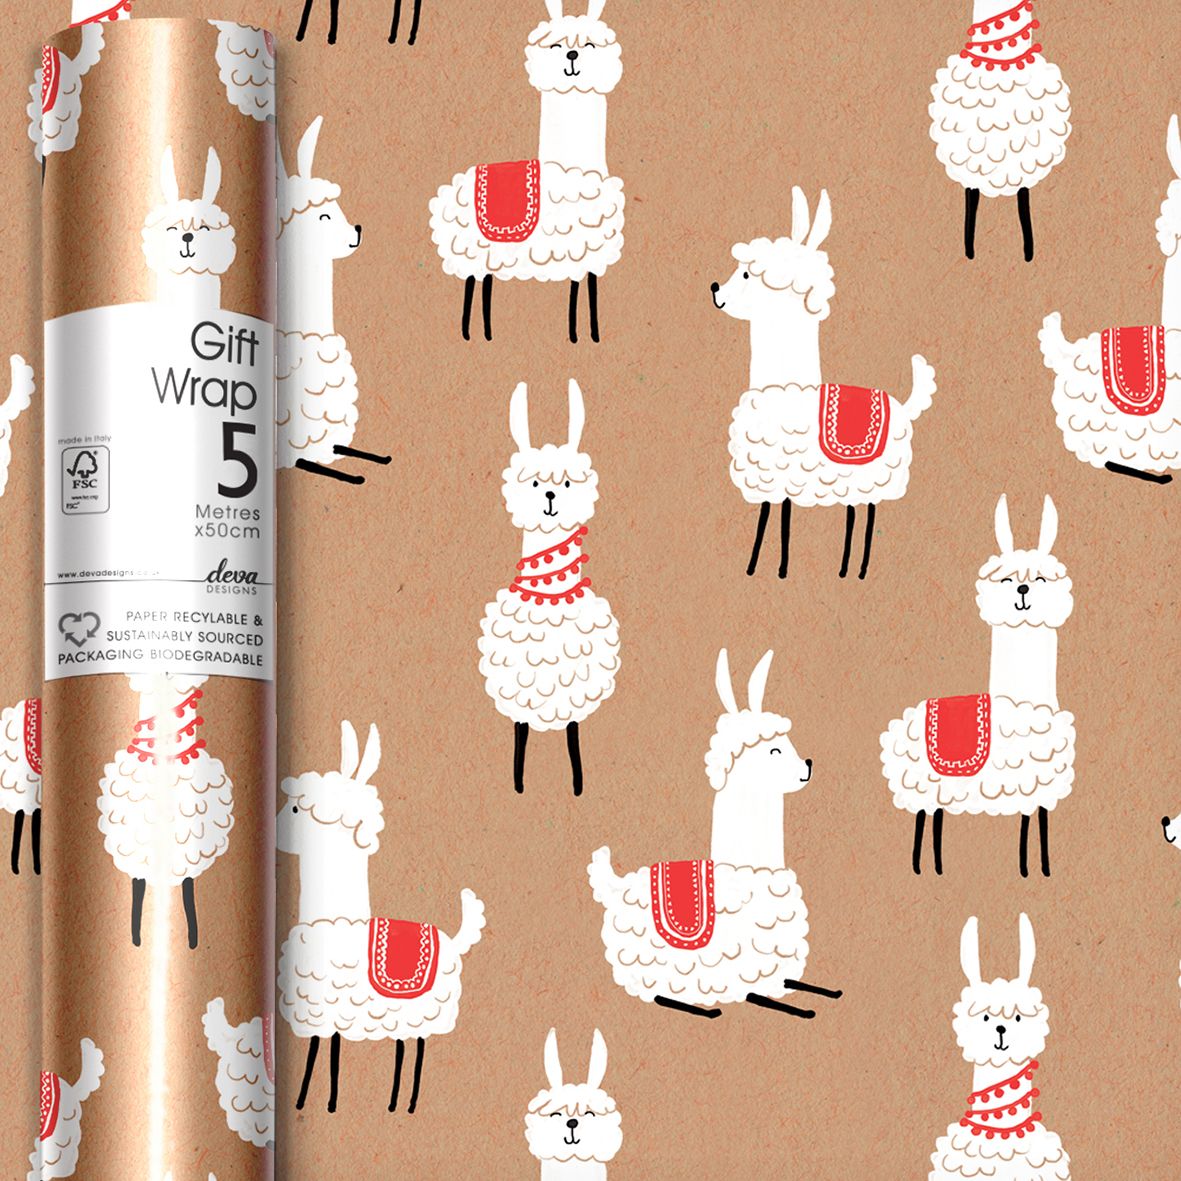 Christmas Gift Wrap Roll | 5m x 50cm Craft Llama by Weirs of Baggot Street